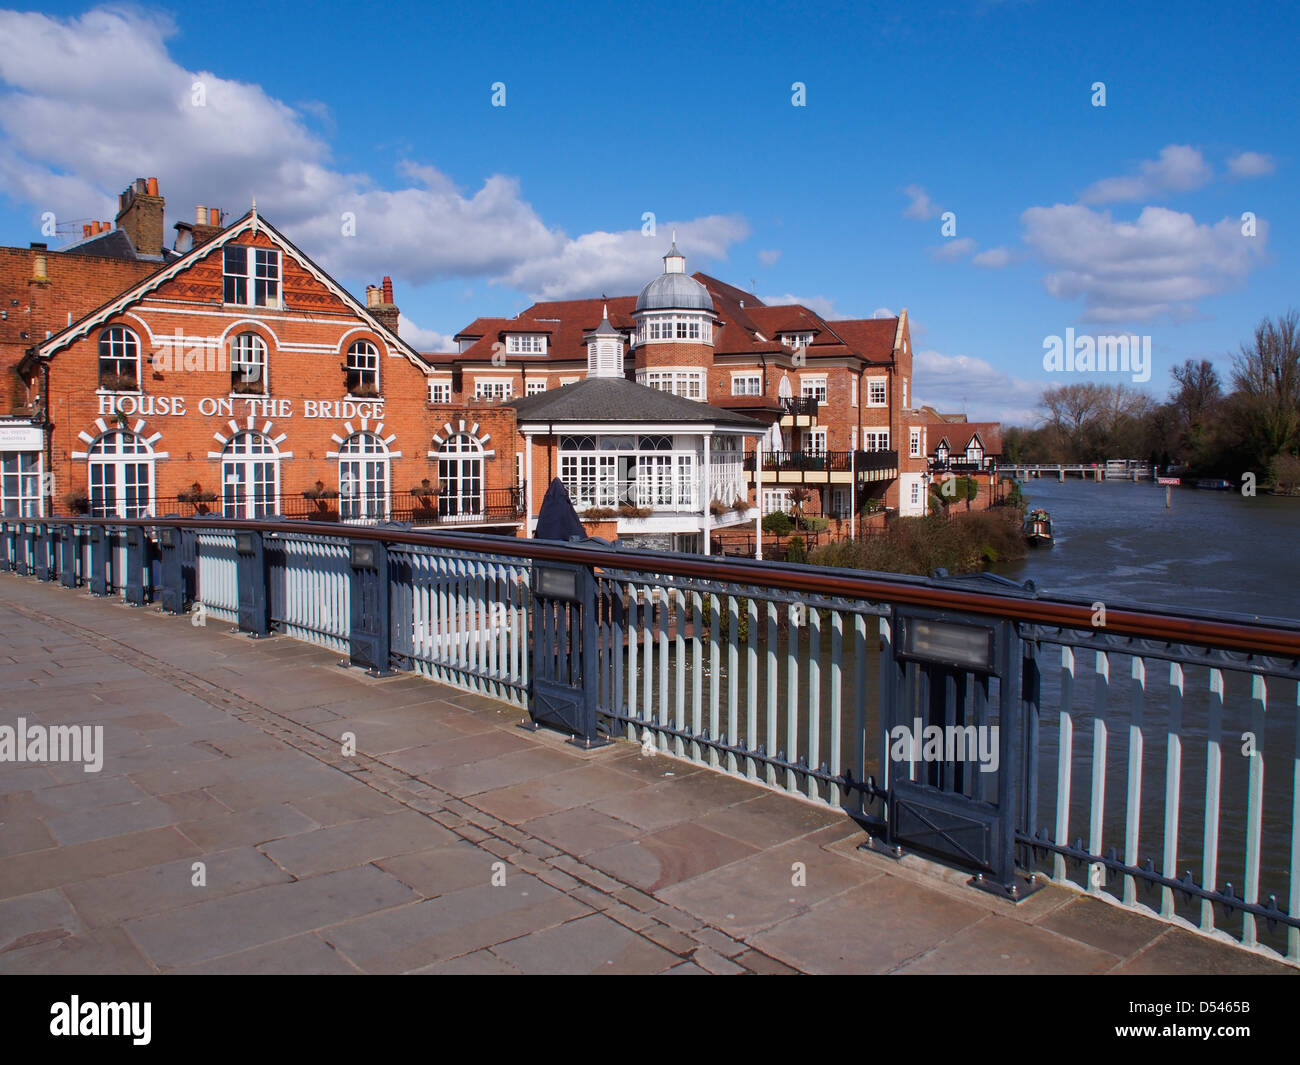 Historic House on the Bridge fine dining restaurant across the River Thames Stock Photo